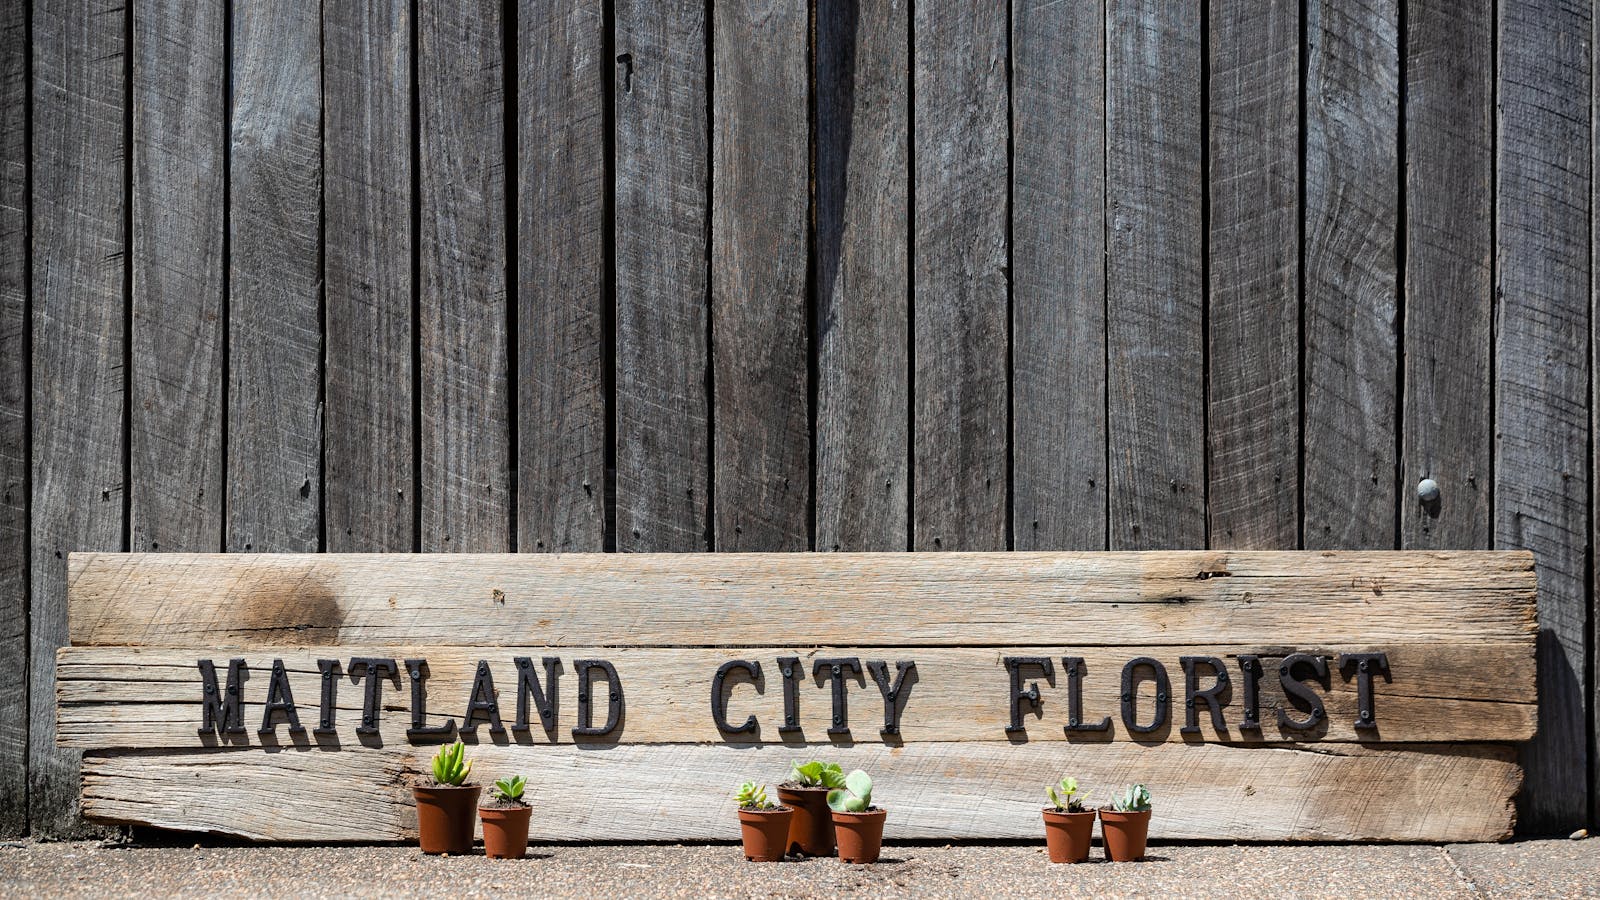 Maitland City Florist